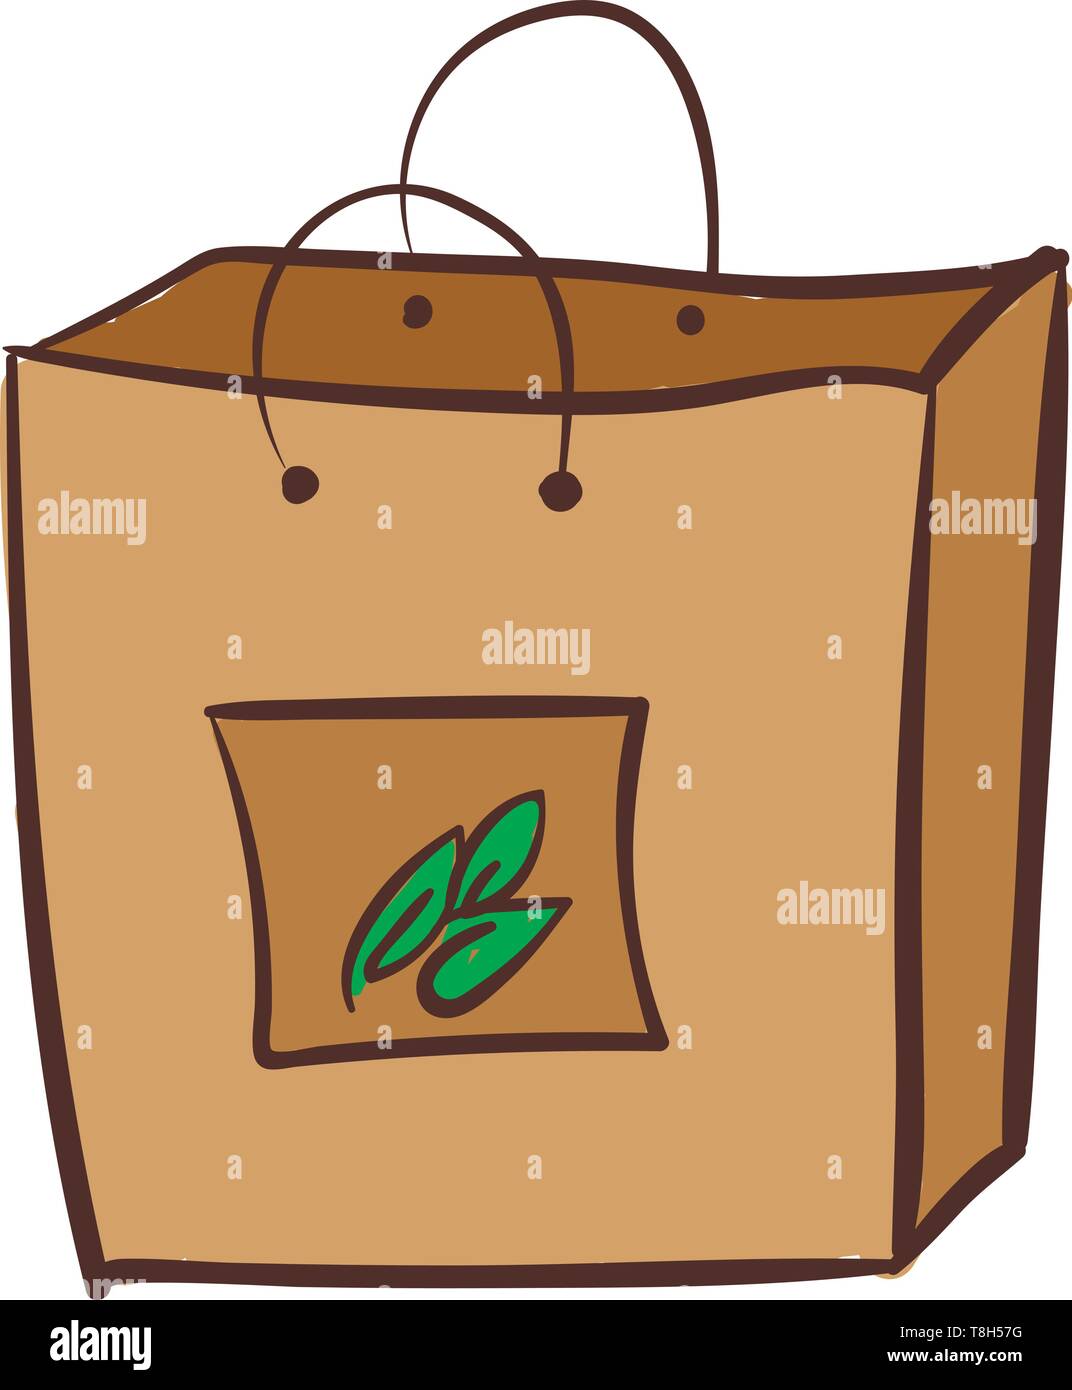 Tote Bag Bag Design Outline Vector Stock Vector Royalty Free 1392087617   Shutterstock